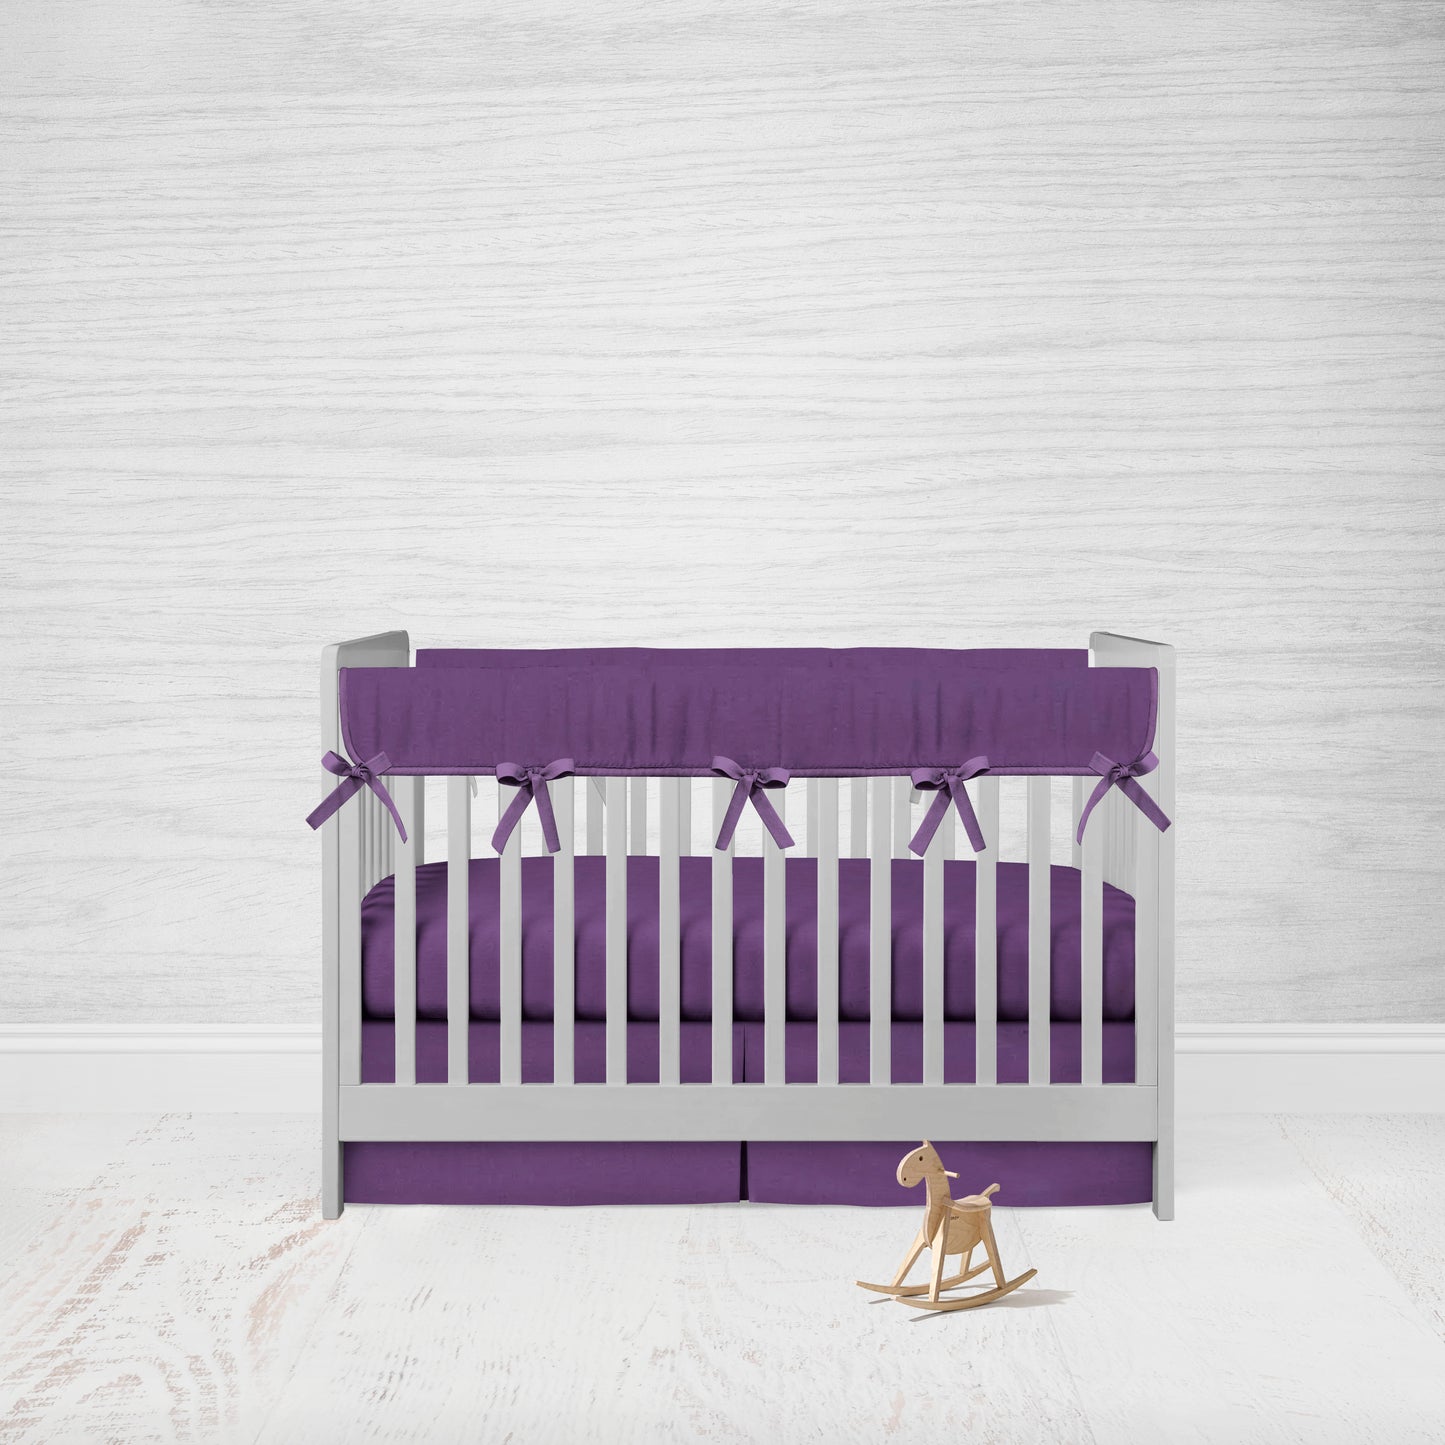 purple rail cover 1 long side, crib sheet & crib skirt in the pleat option